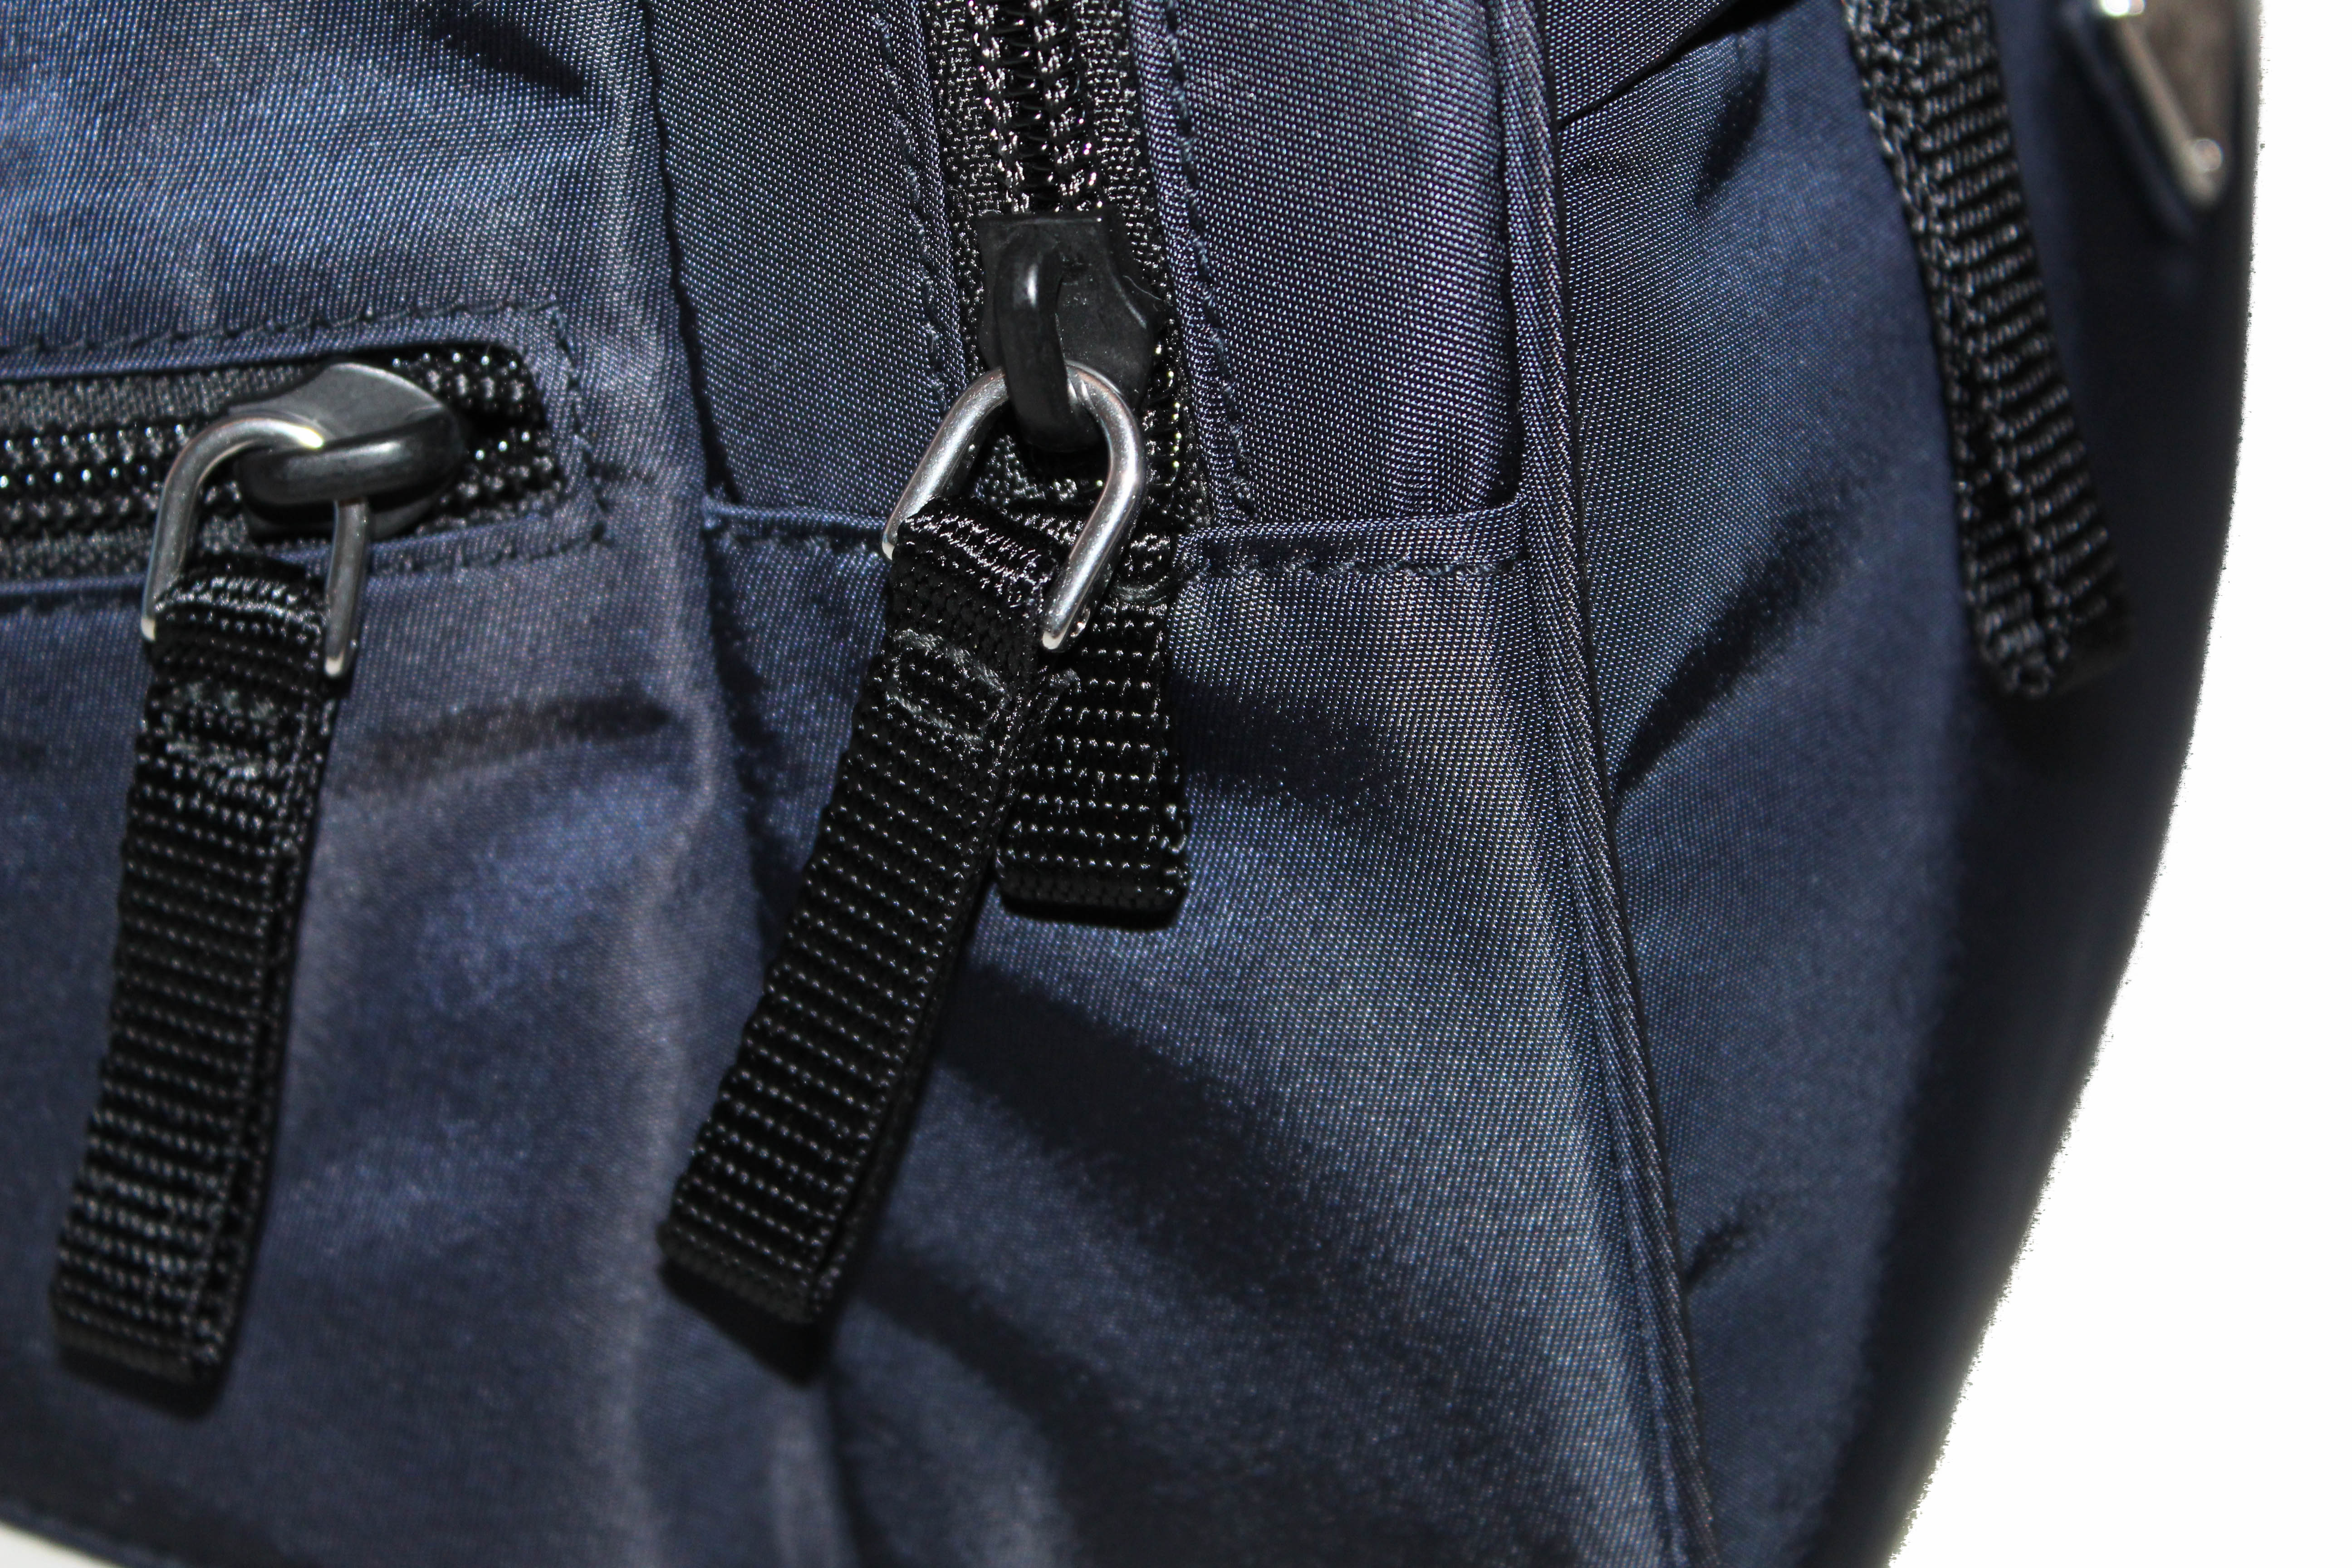 Authentic New Prada Navy Blue Nylon Waistbag